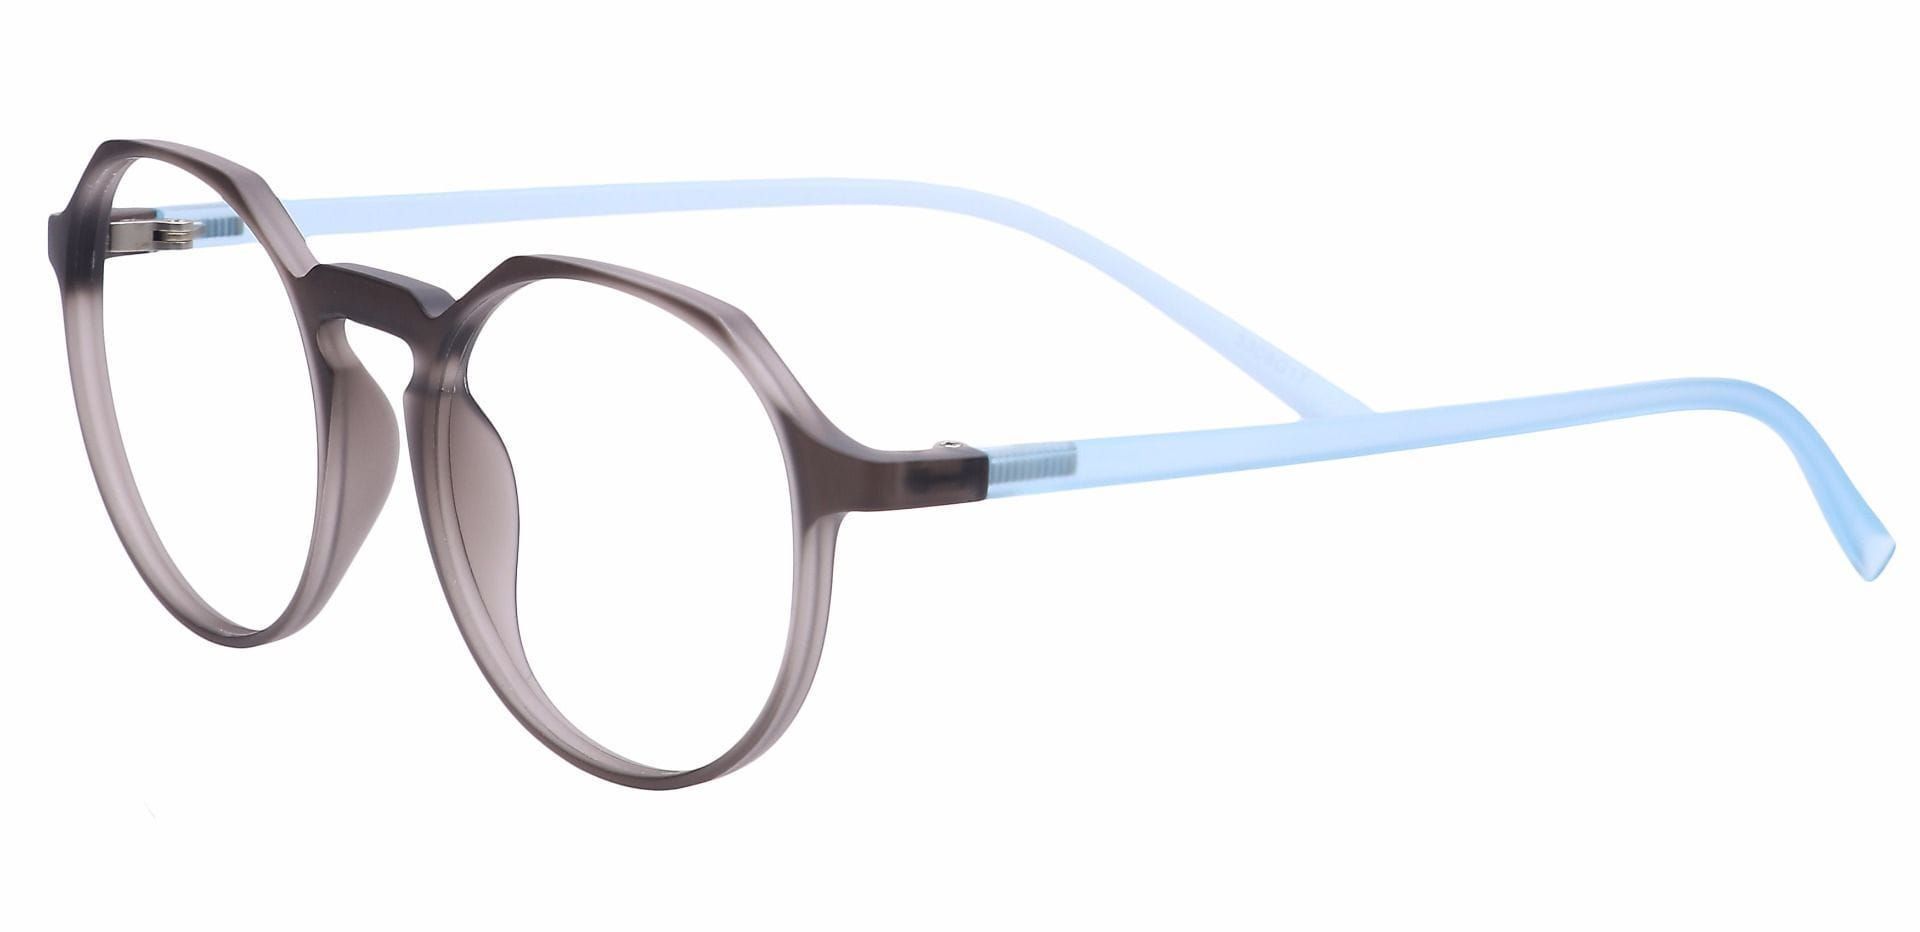 Dash Oval Reading Glasses - Gray